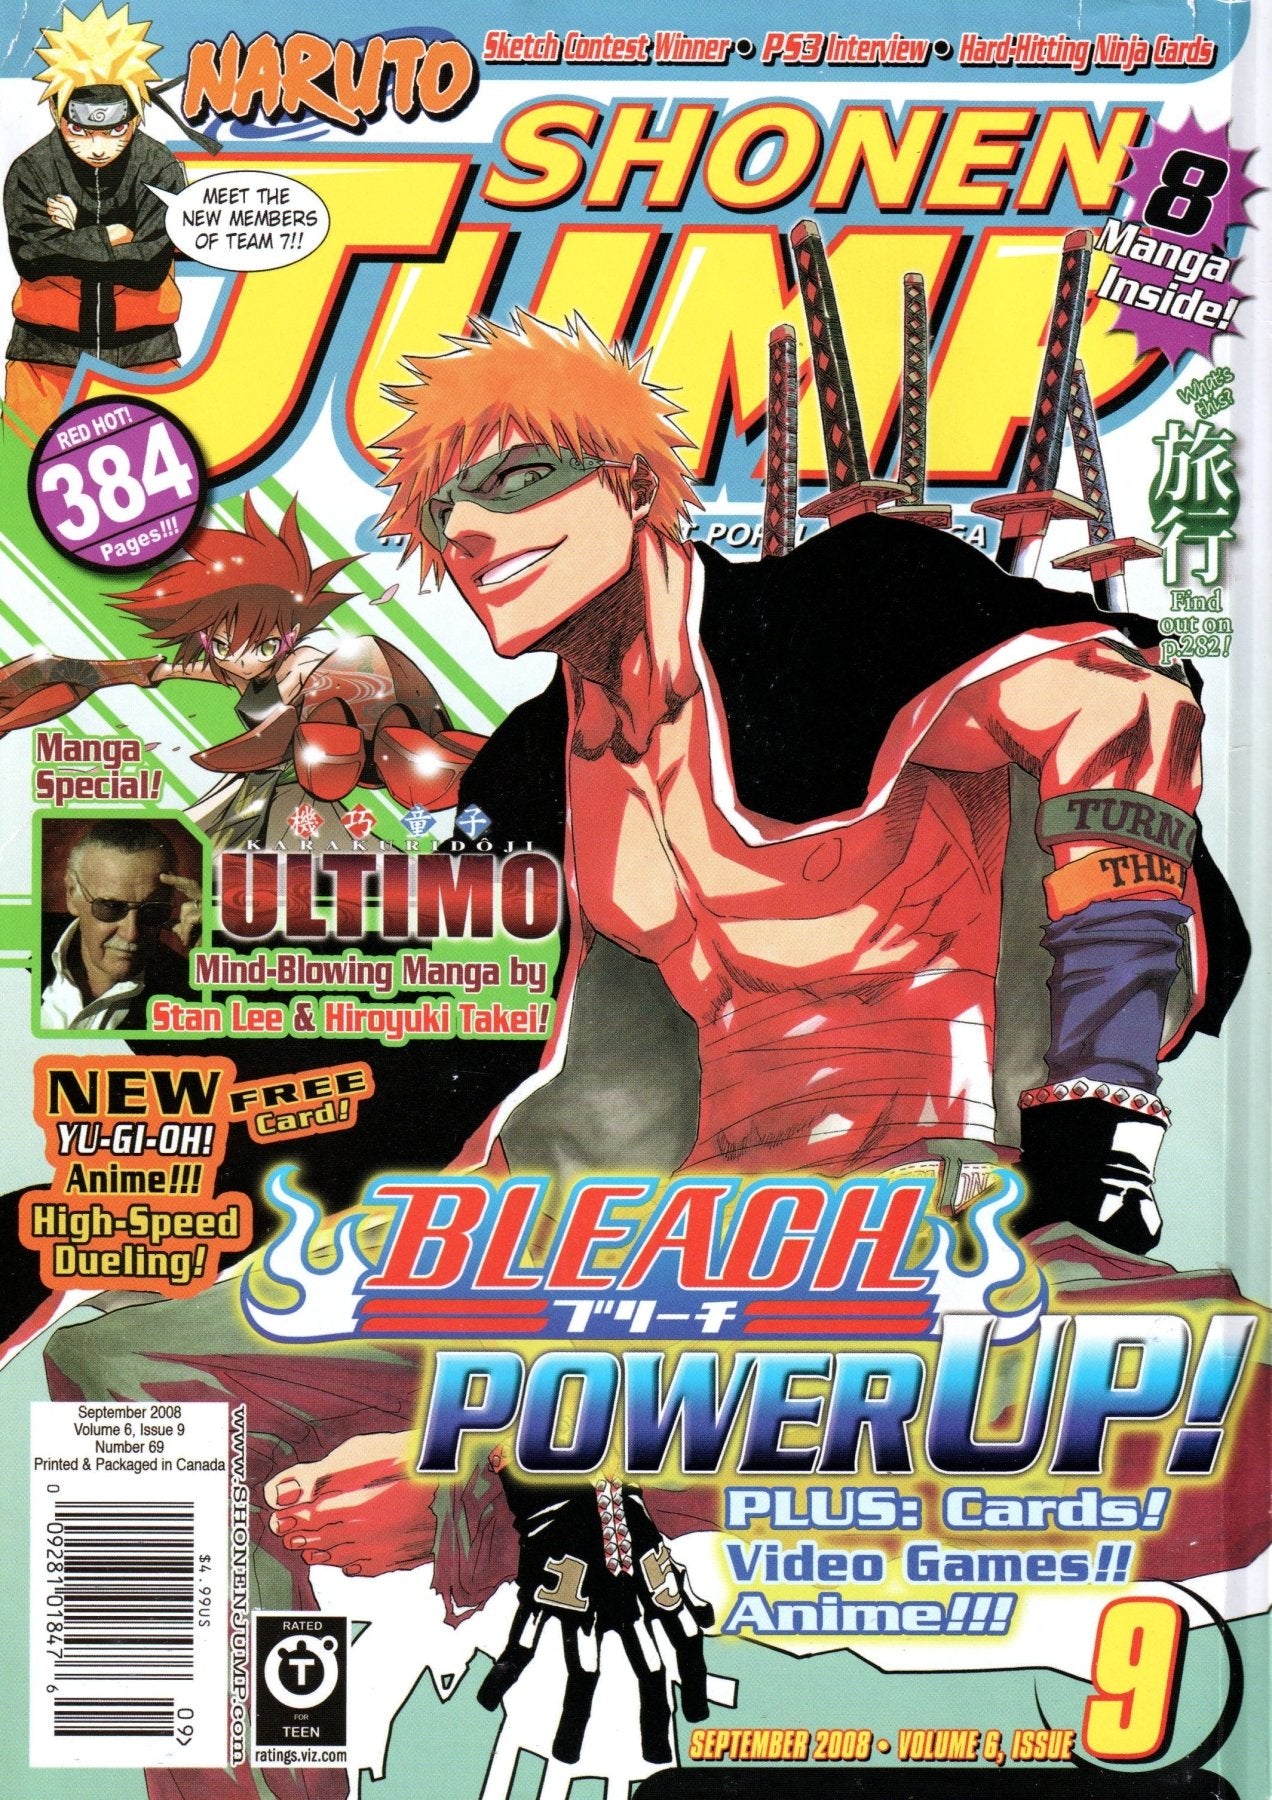 Shonen Jump: September 2008 Volume 6, Issue 9 - Magazine - Retro Island Gaming